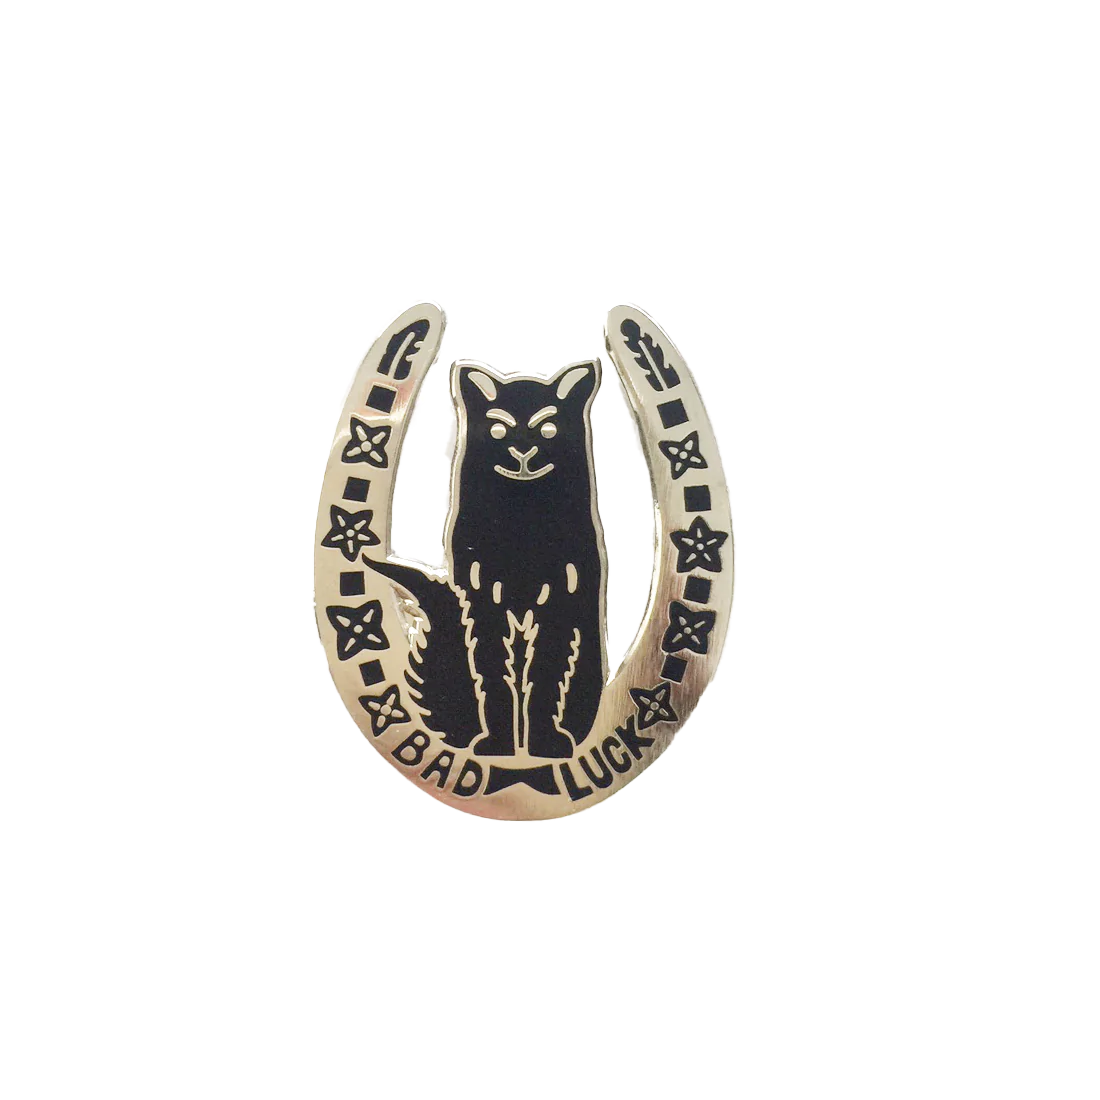 Bad Luck Cat Horseshoe Enamel Pin Badge